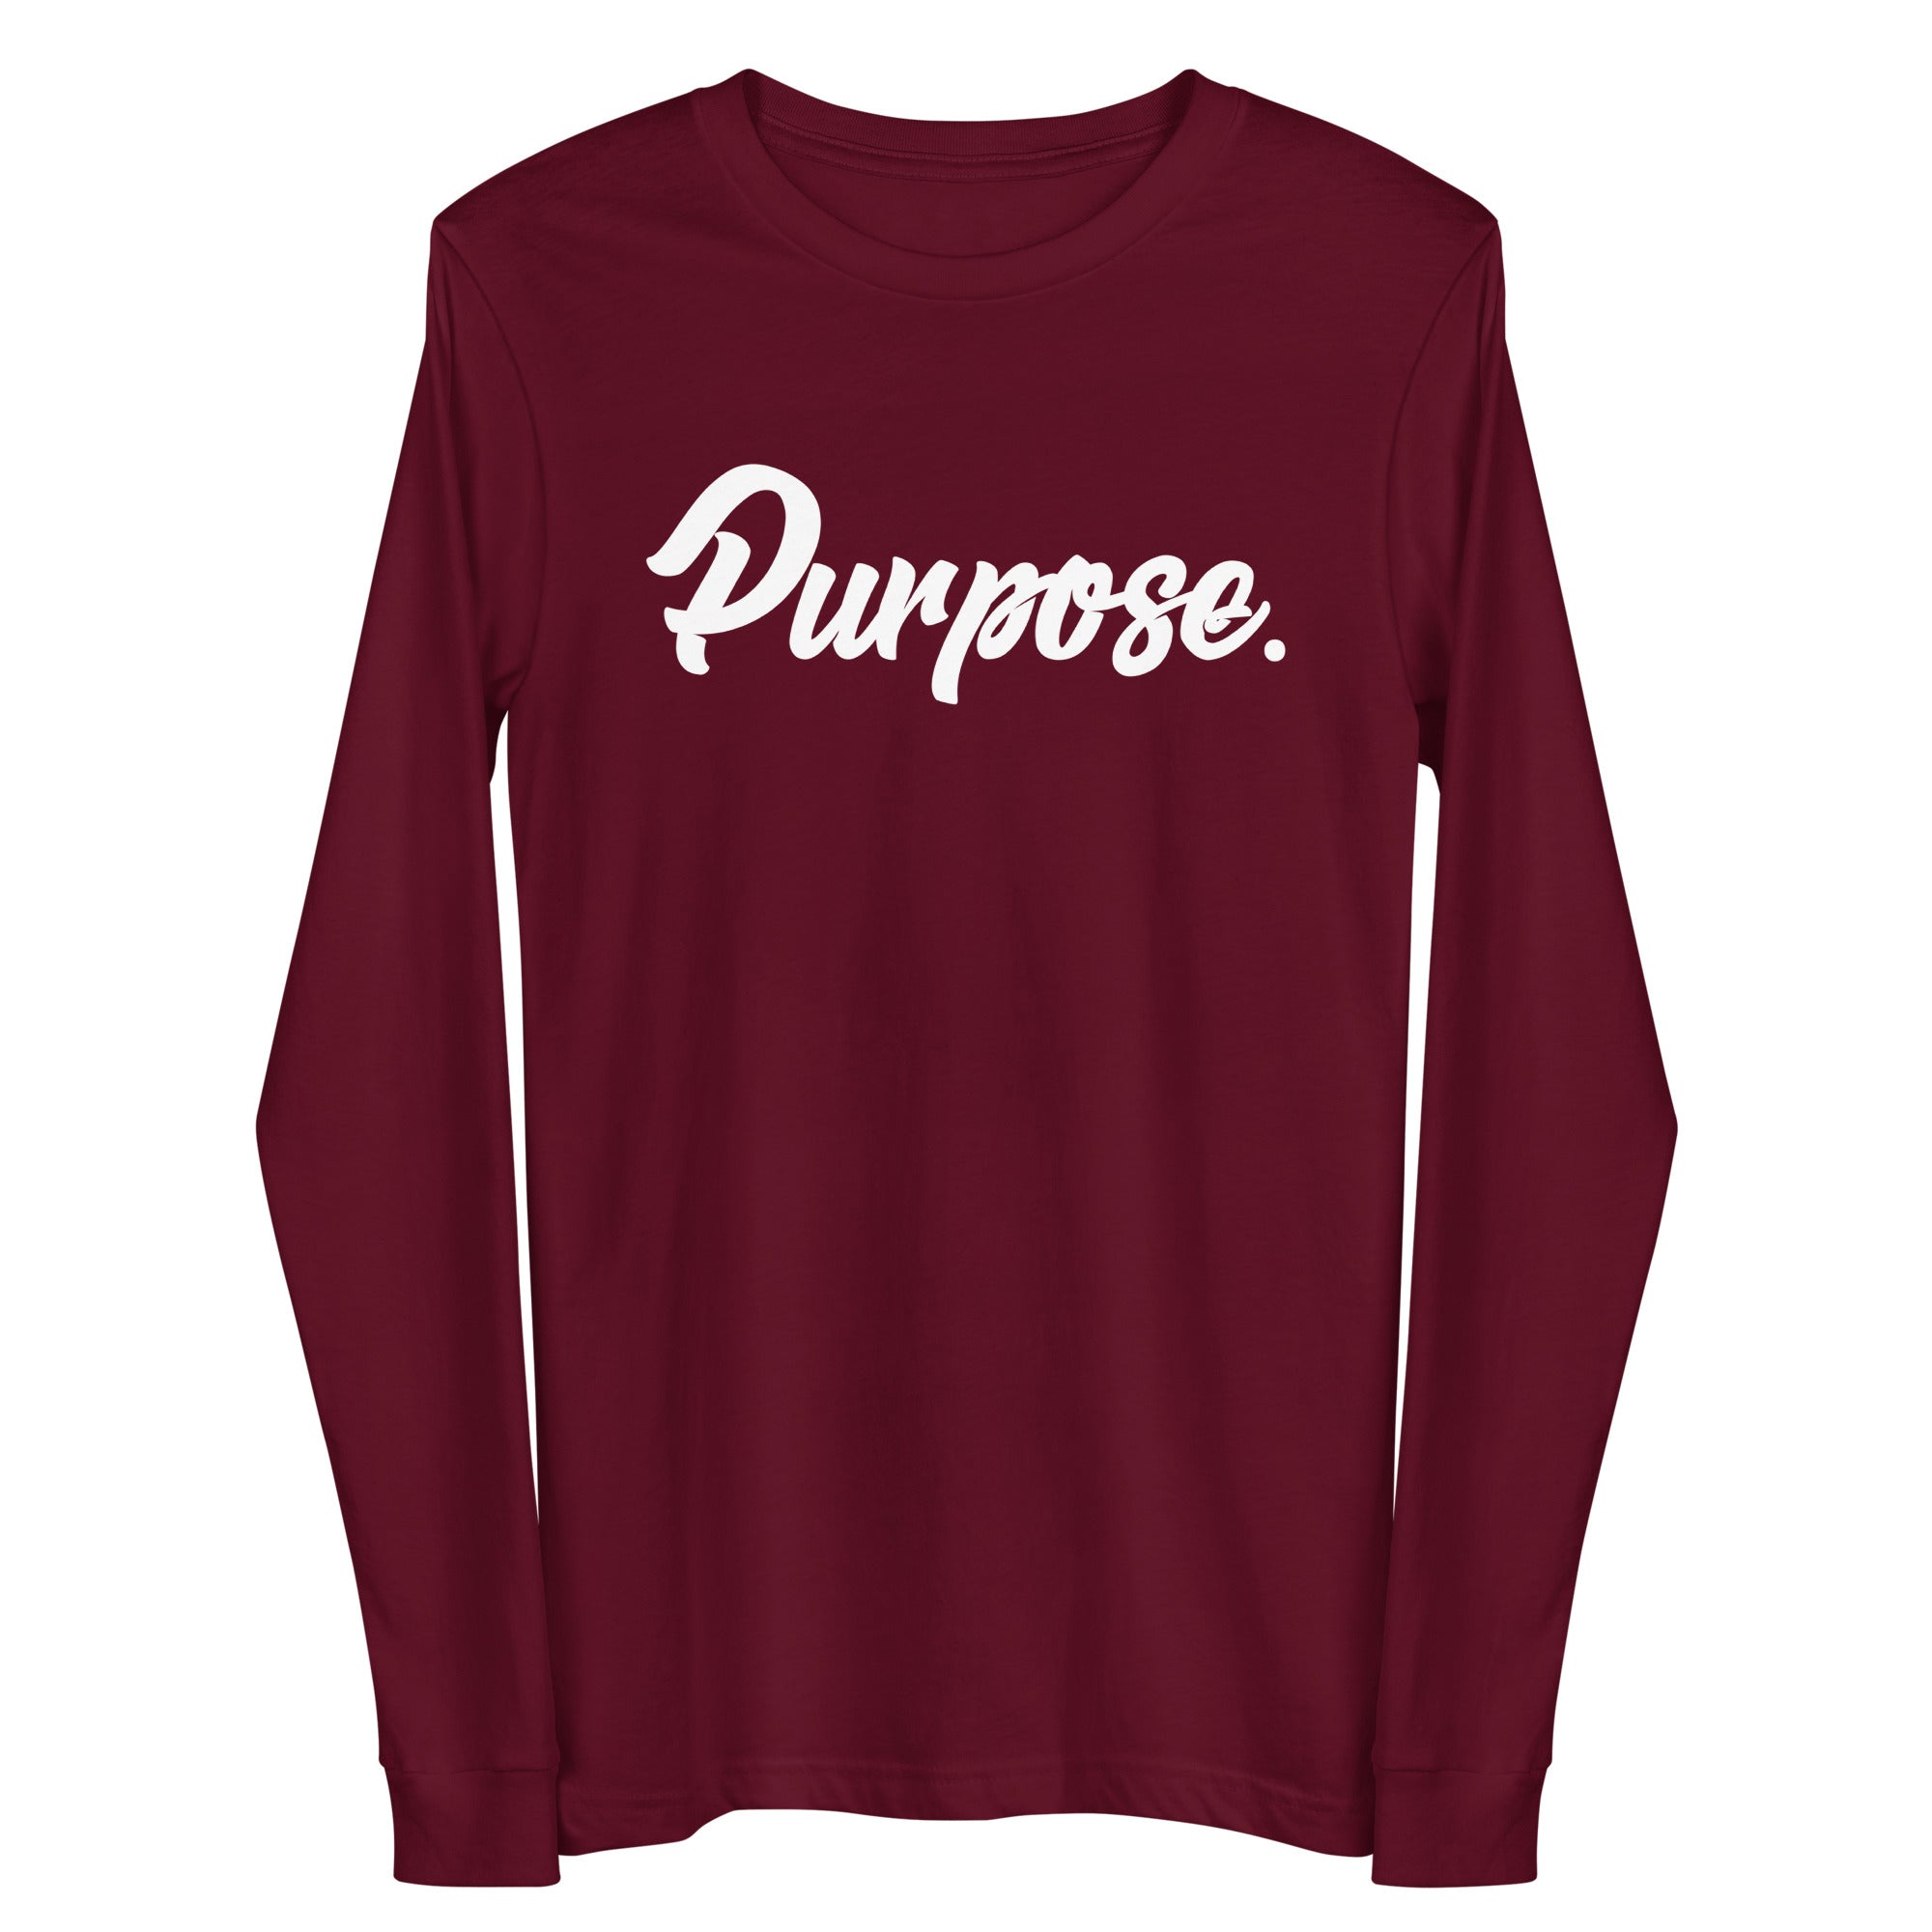 Purpose. Long Sleeve Tee